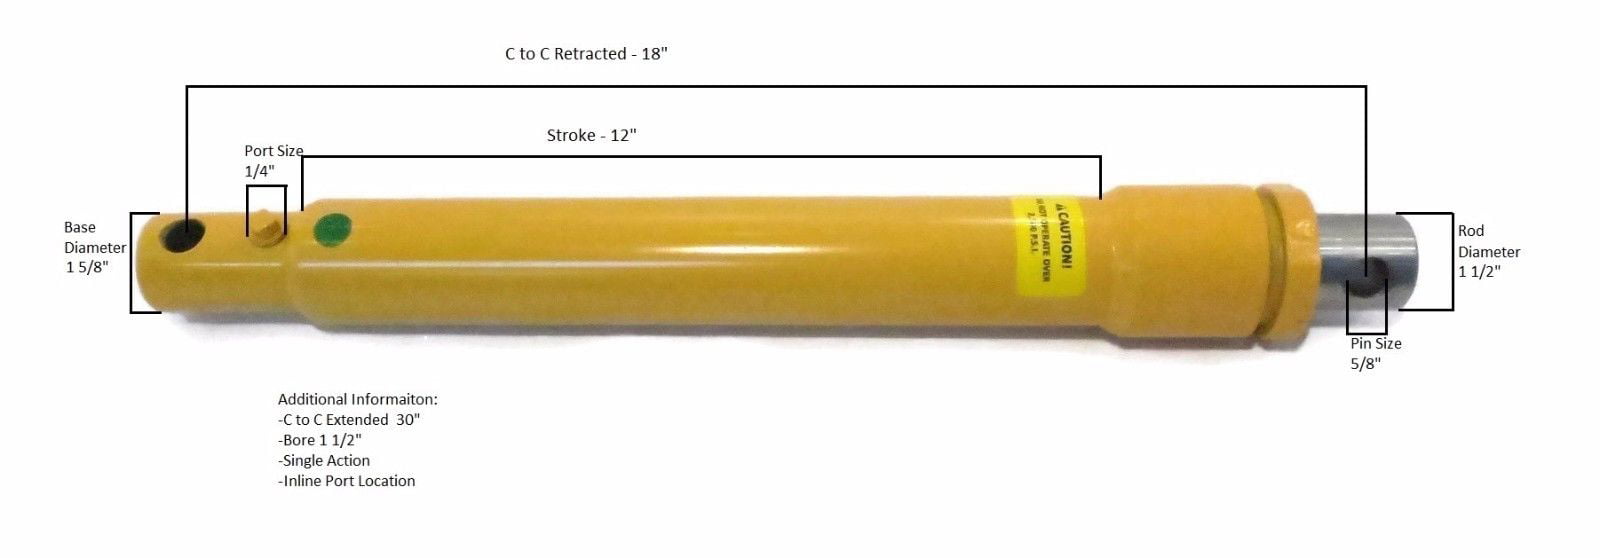 Buyers 1304010 Hydraulic Cylinder 1-1/2" x 12" For Meyer Snowplow 05437 